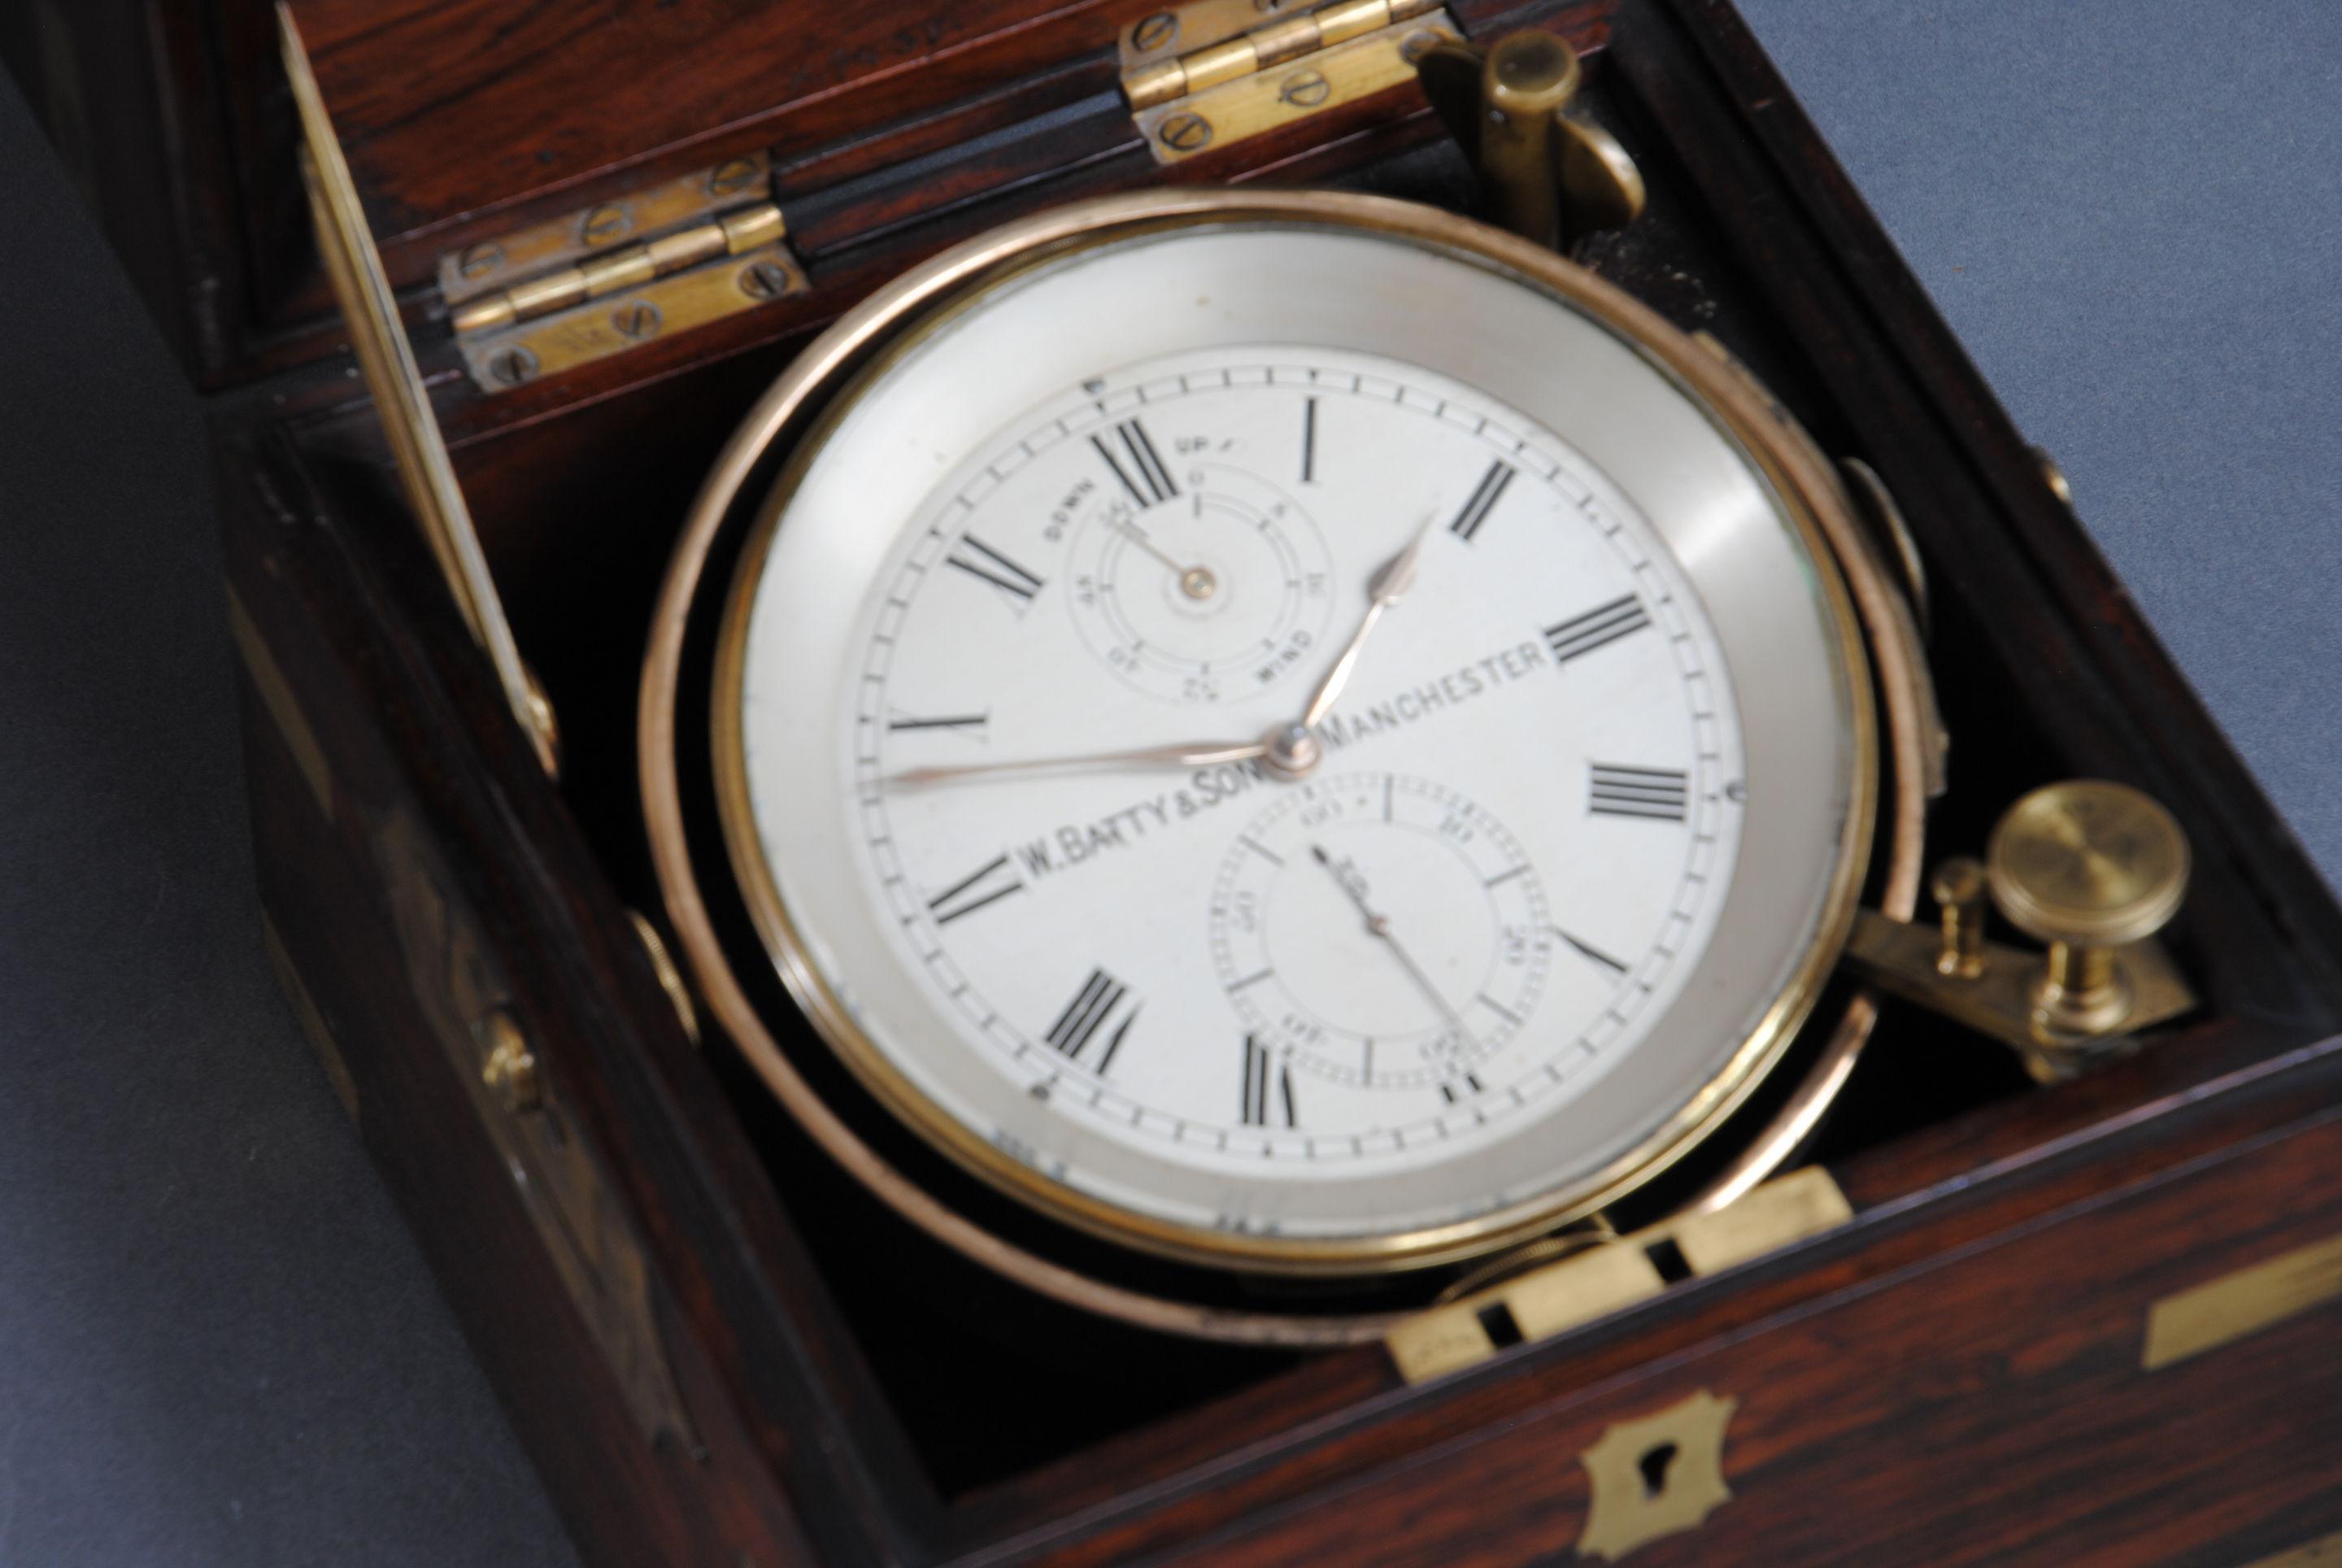 chronometer measures